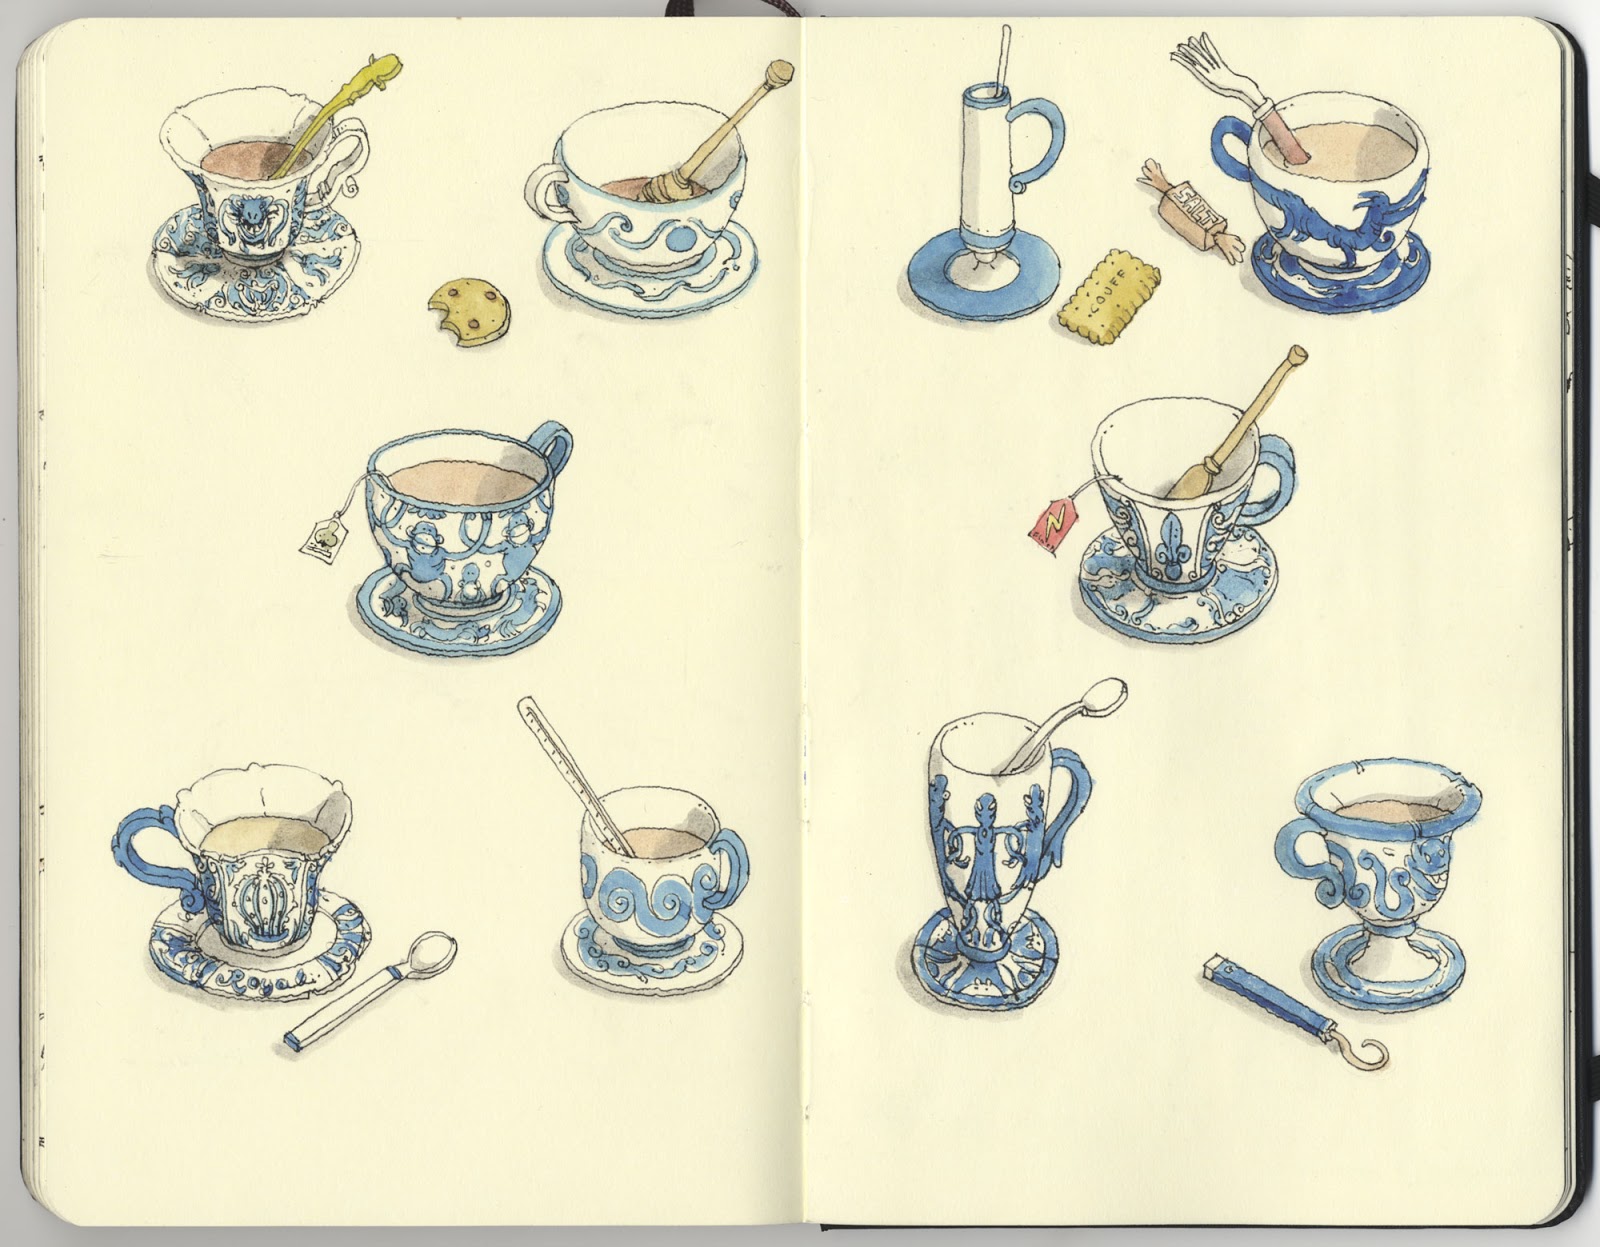 teacups